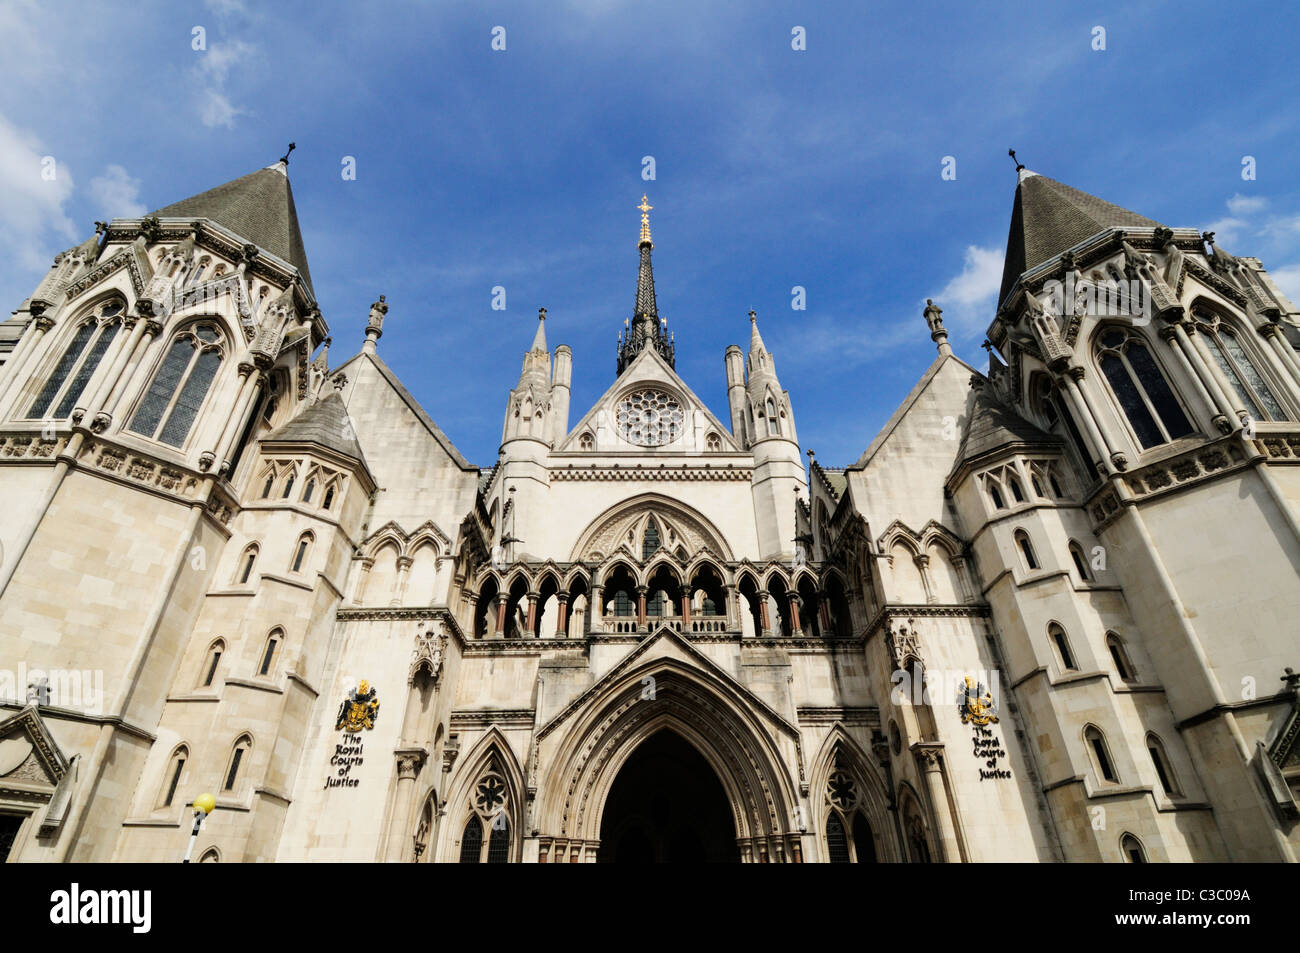 La Royal Courts of Justice, Fleet Street, London, England, UK Banque D'Images